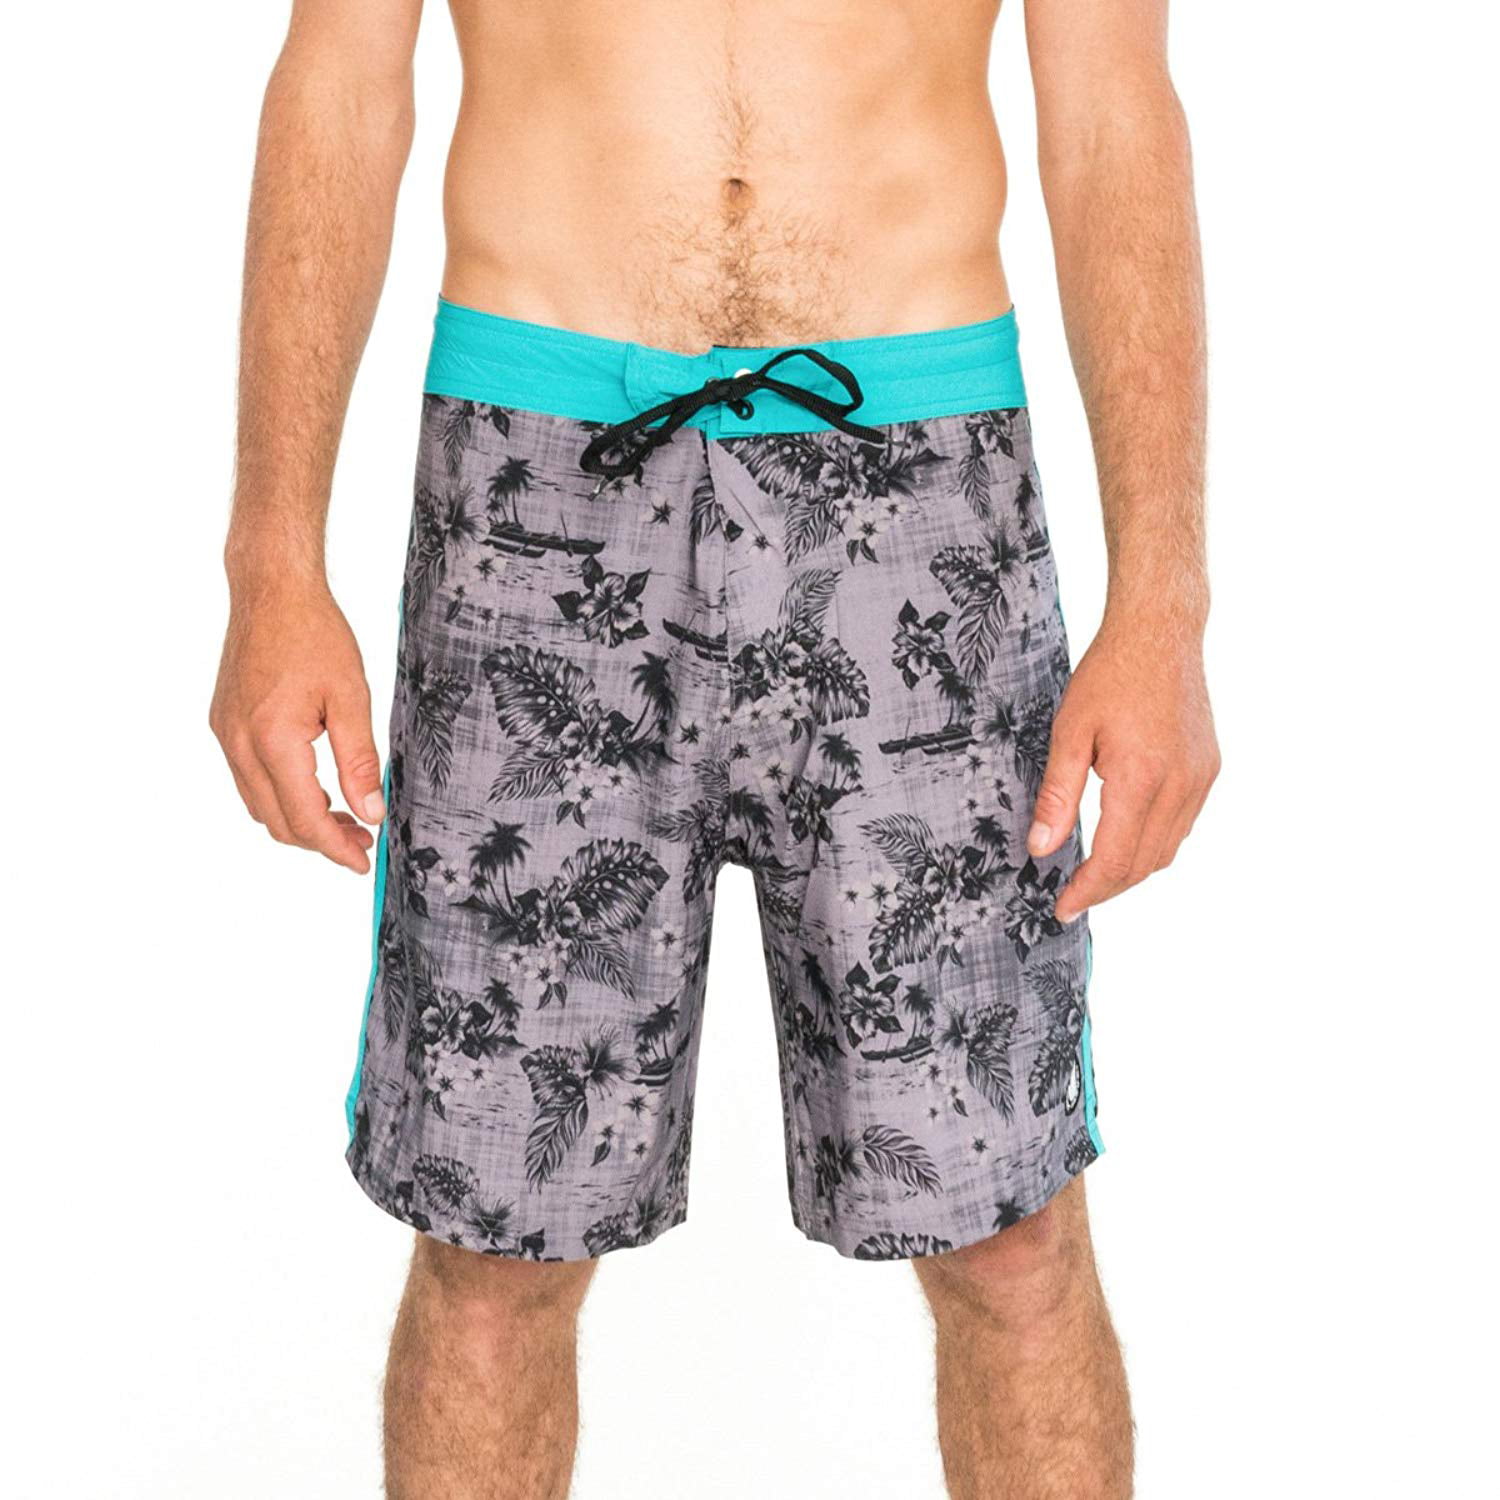 Body Glove Men's Vapor Outrigger Boardshorts Charcoal Swimsuit Bottoms ...